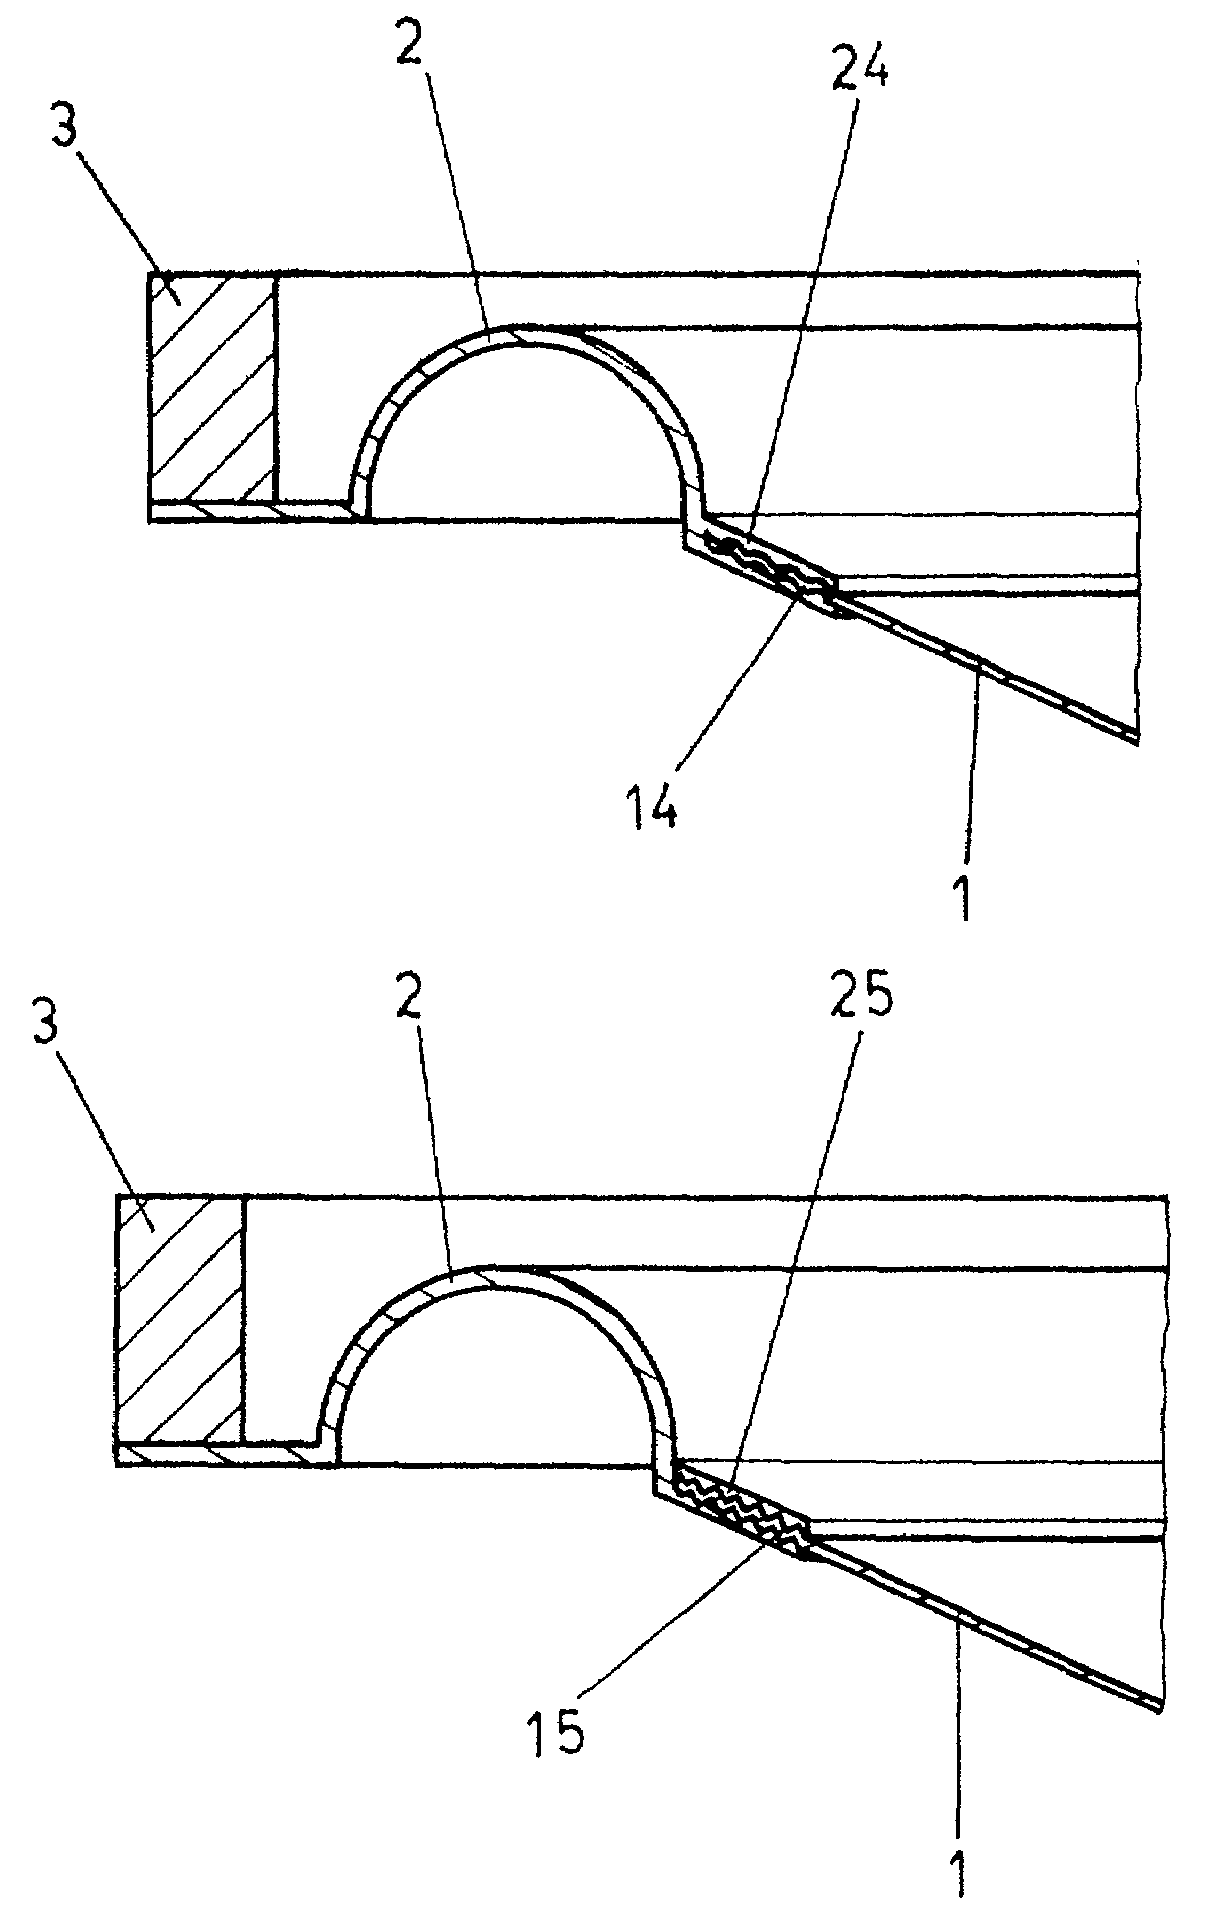 Connection of sound bowl of loudspeaker